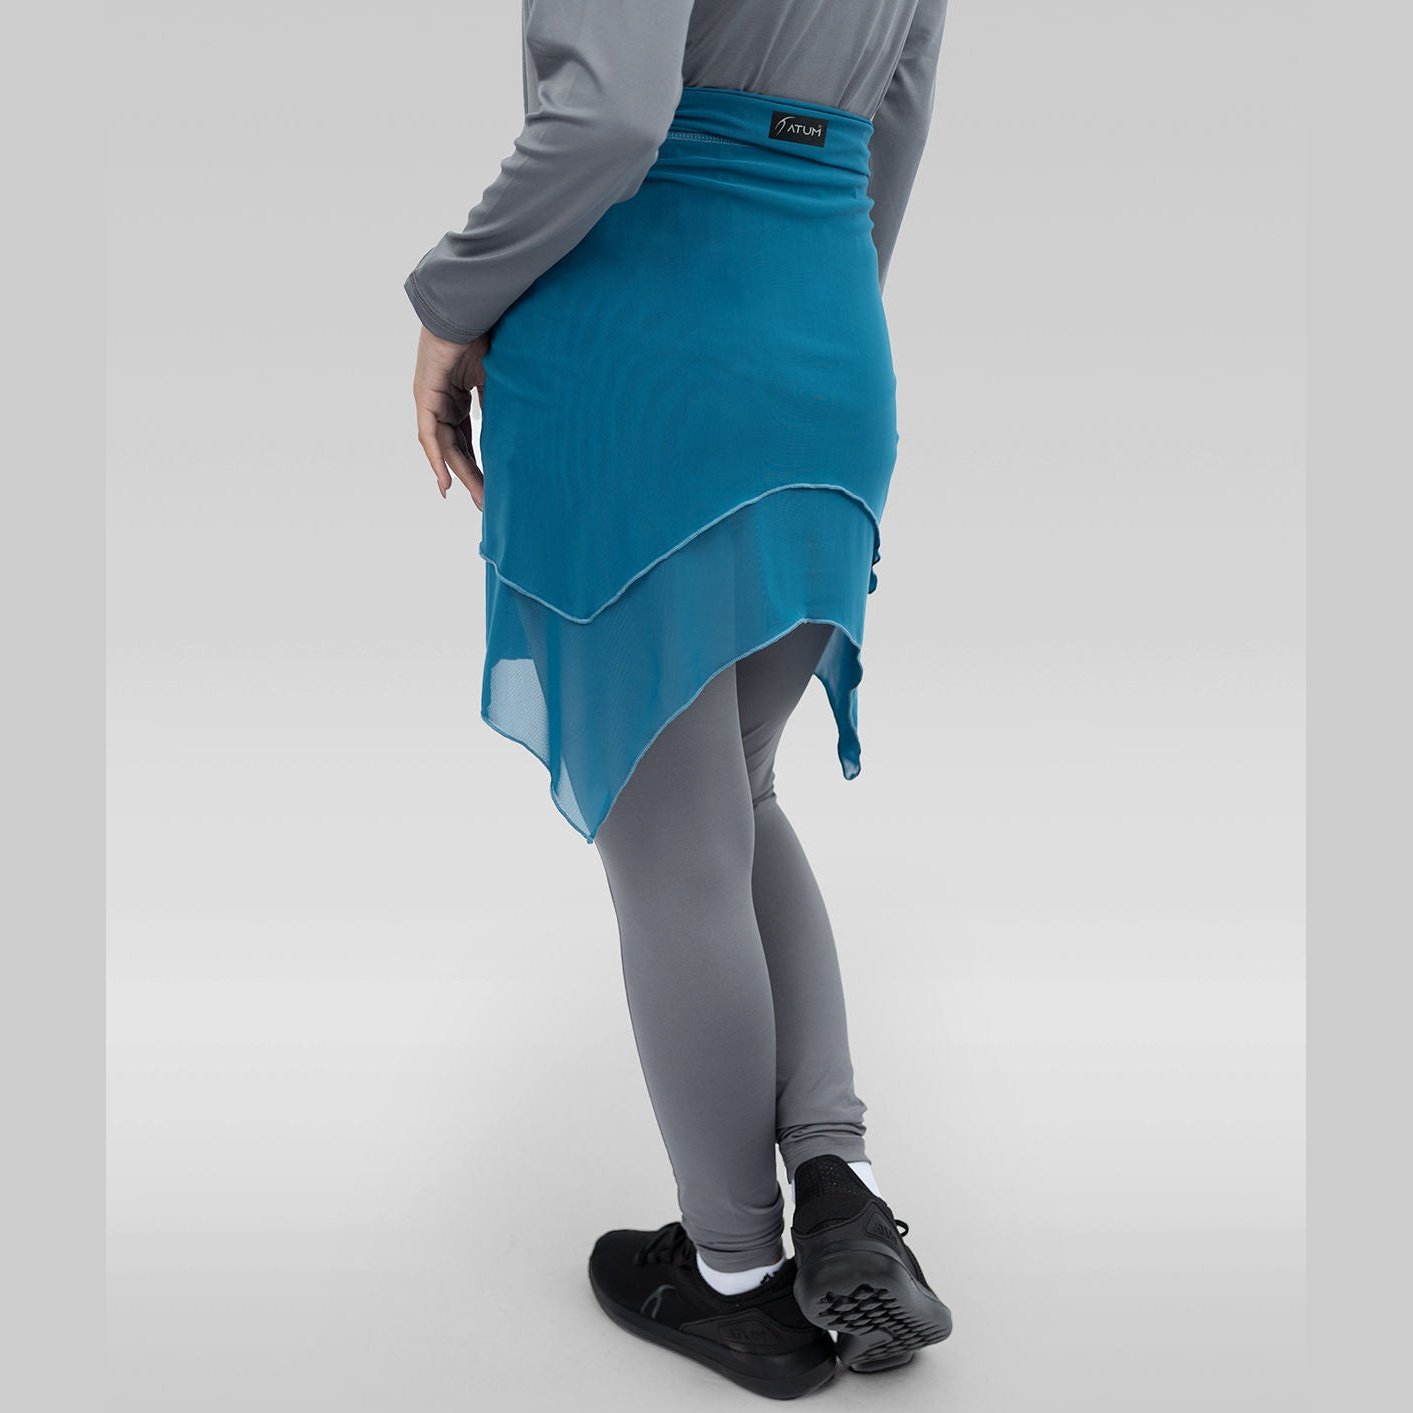 Atum Women's Hip Cover up Skirt